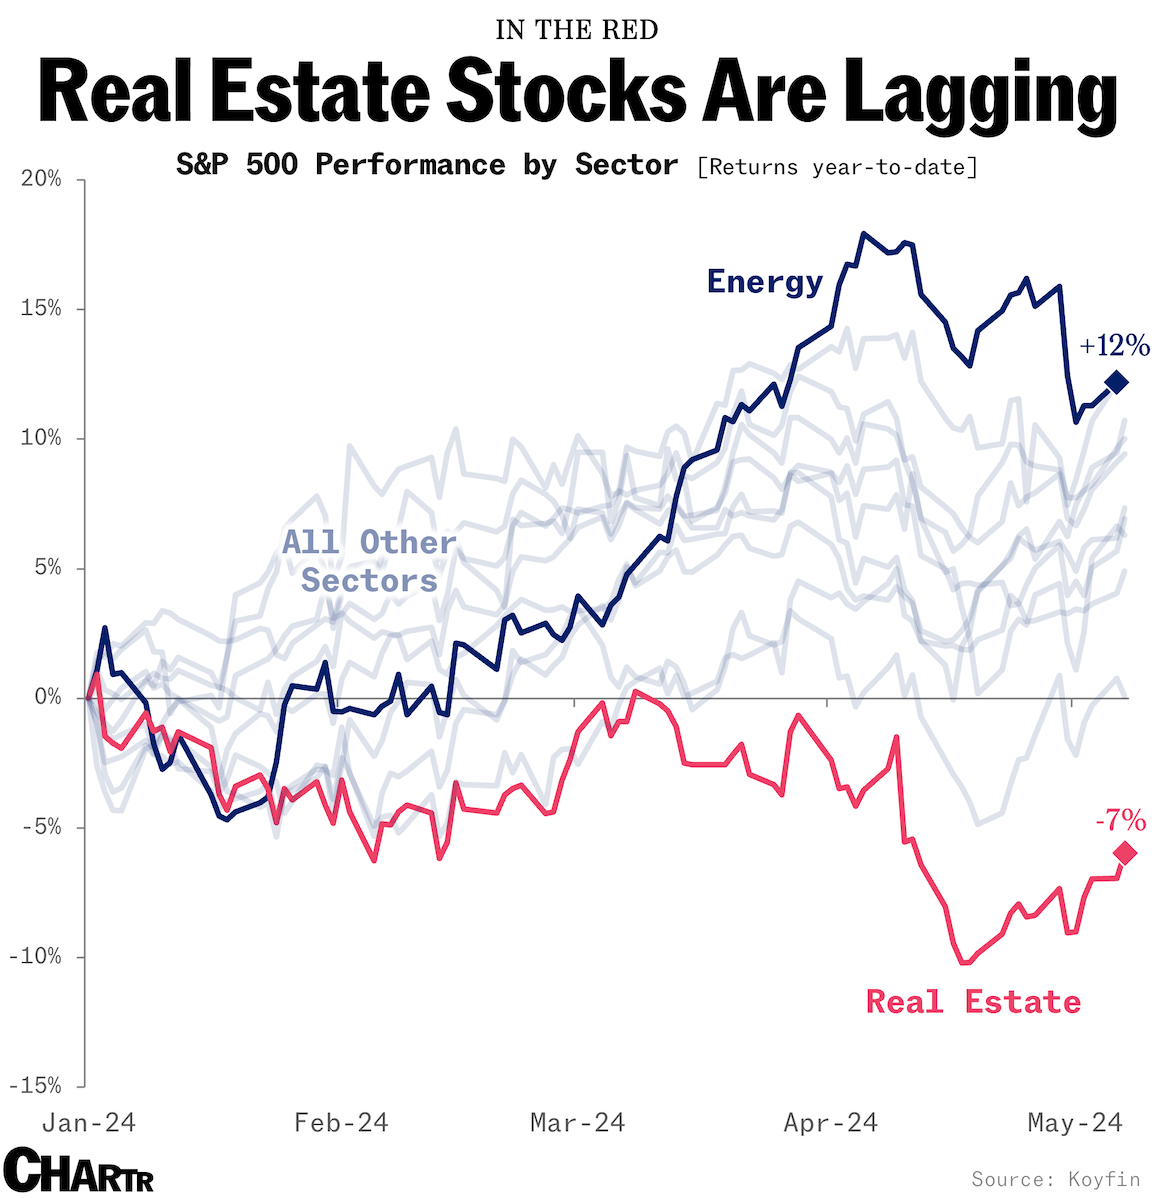 Real estate stocks